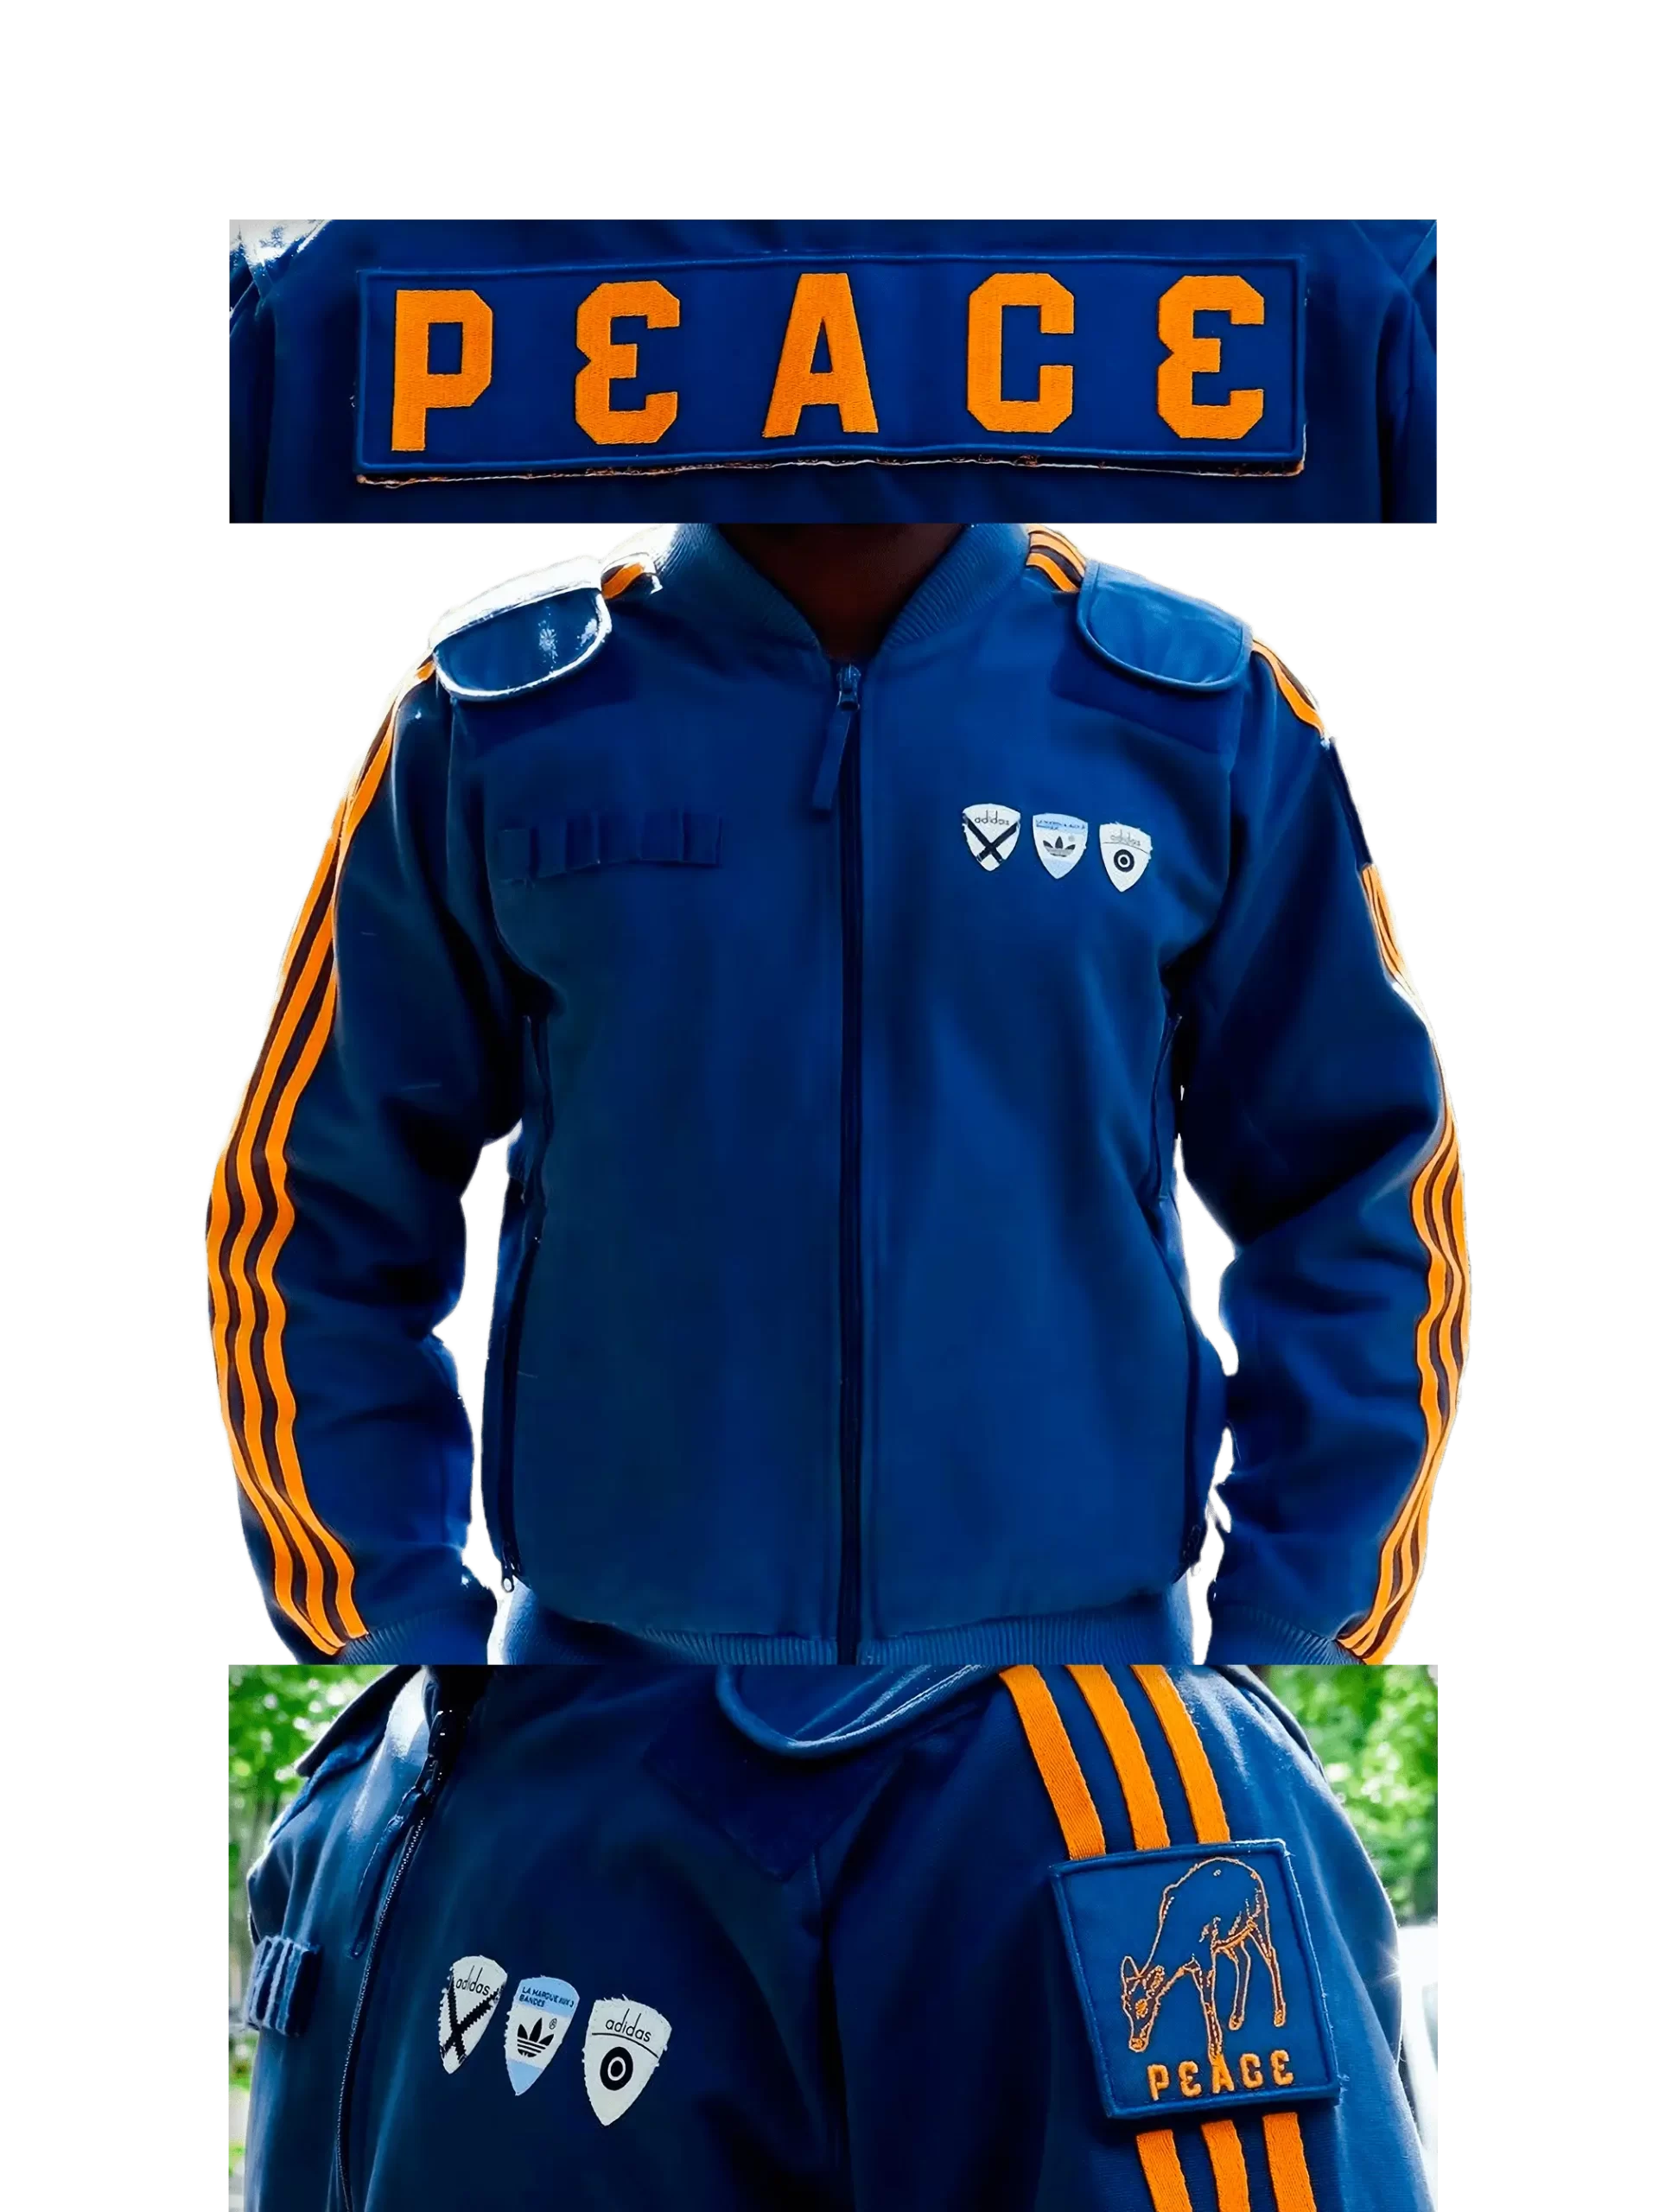 Men's 2005 Adidas Originals Military Peace Jacket : Unstoppable (EnLawded.com file #lmchk83180ip2y125207kg9st)